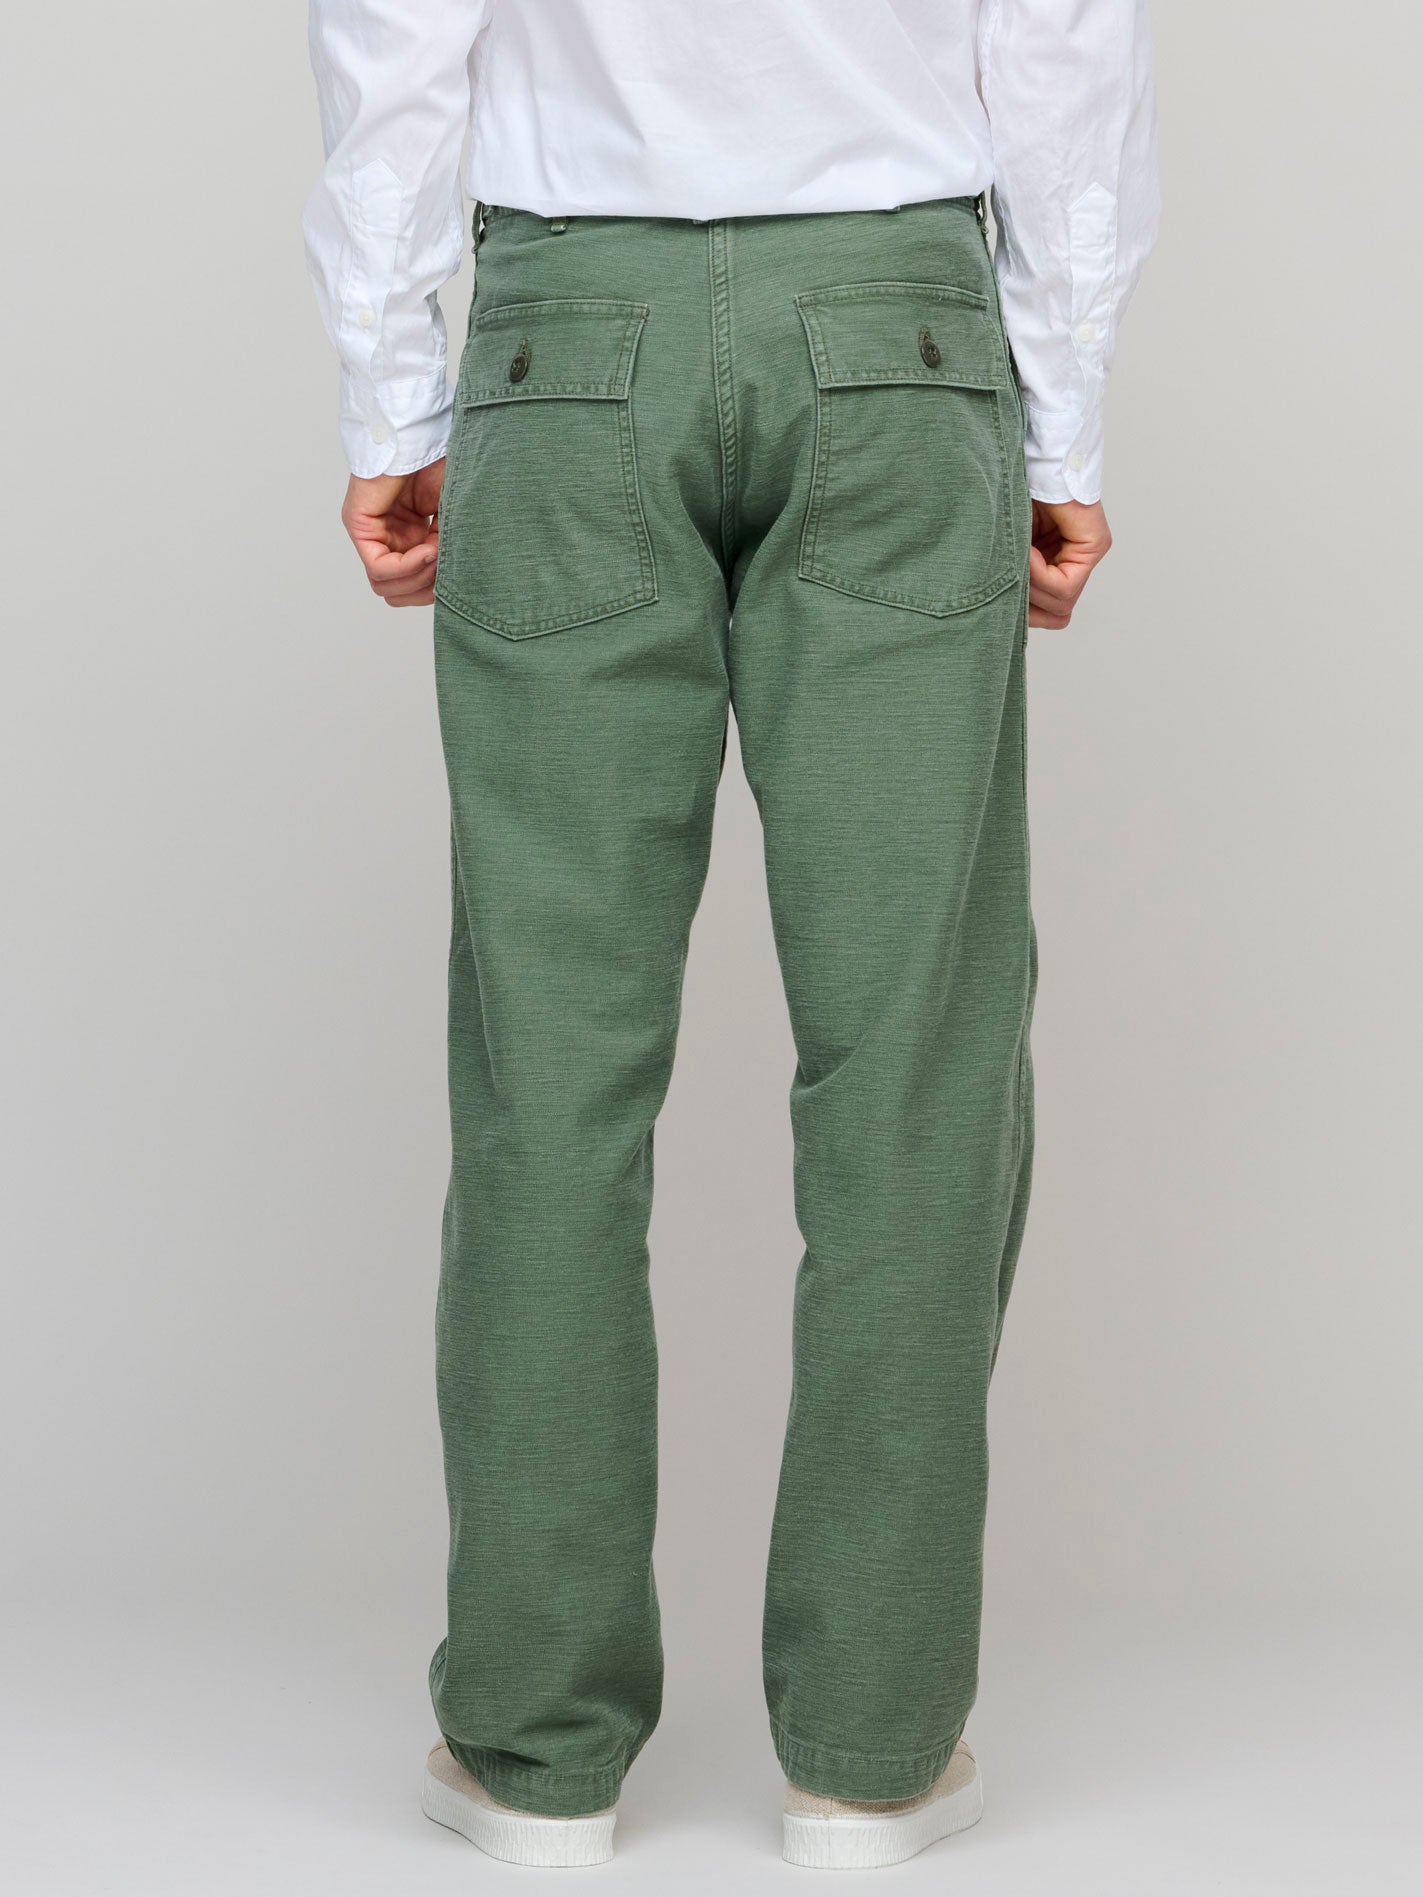 US Army Fatigue Pants Regular, Green Used Wash